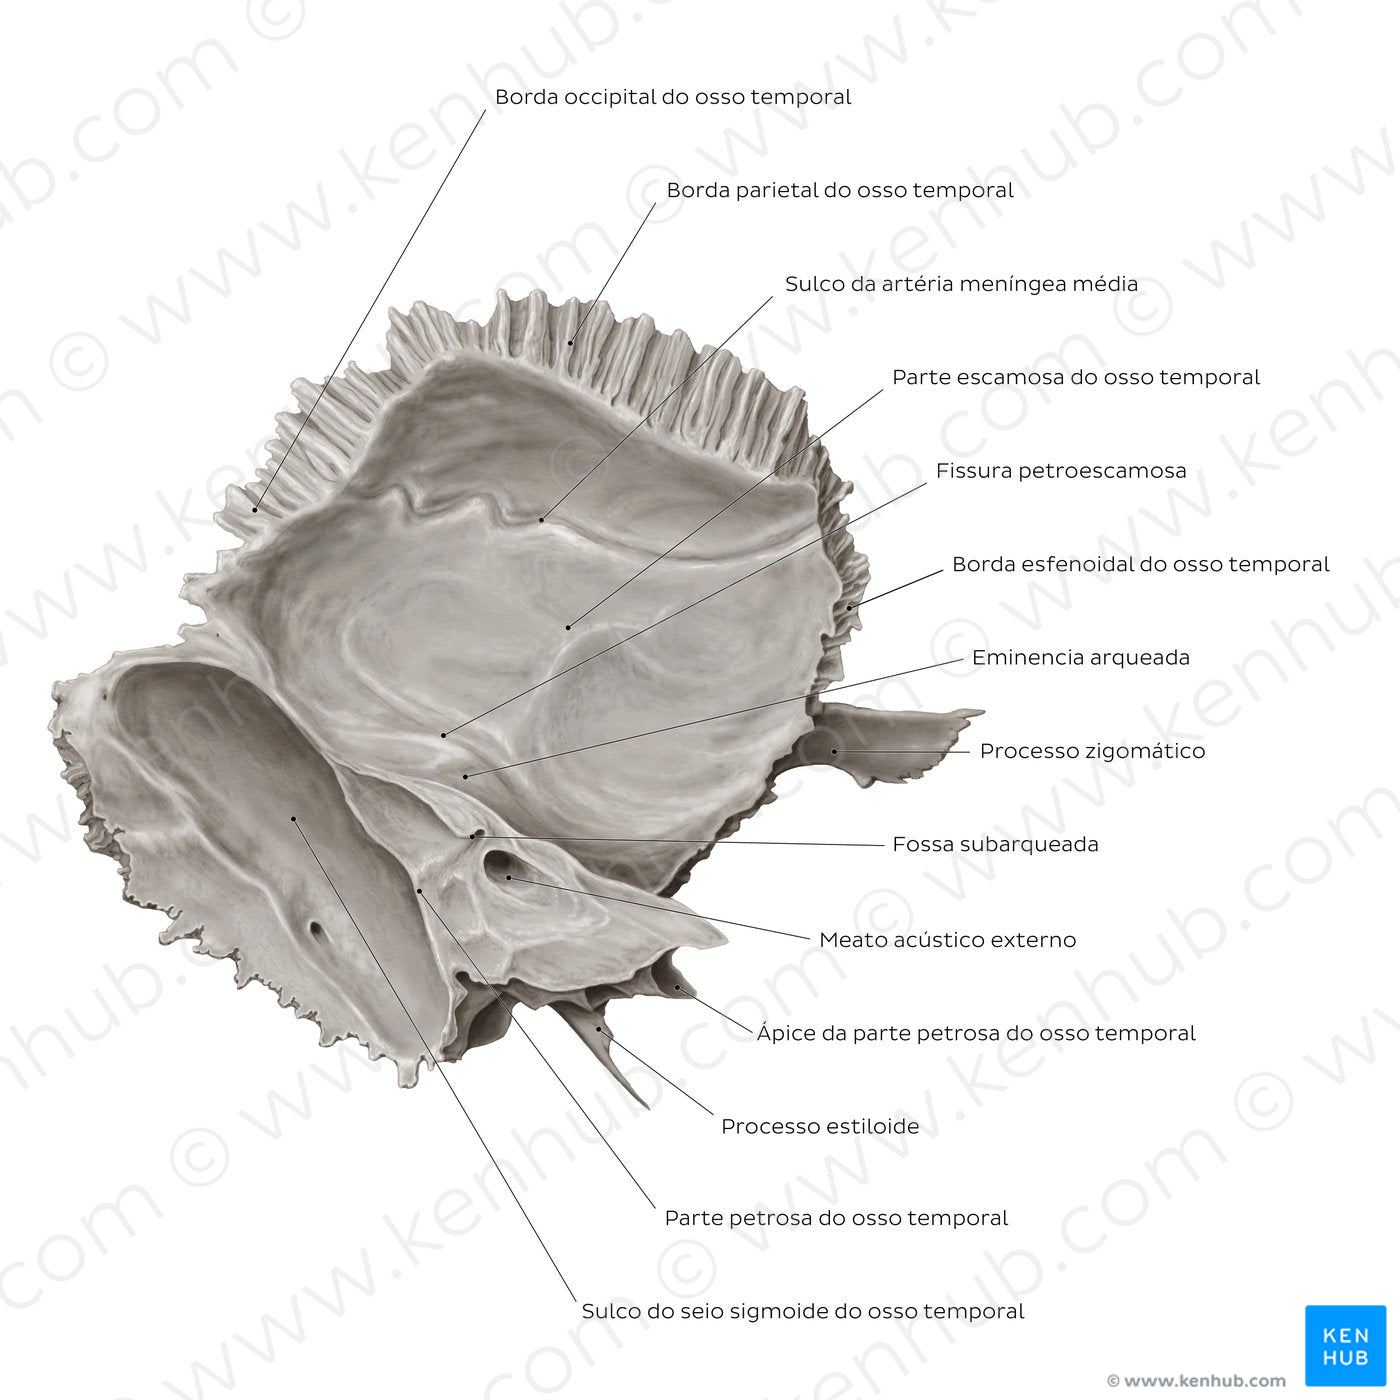 Temporal bone (medial view) (Portuguese)